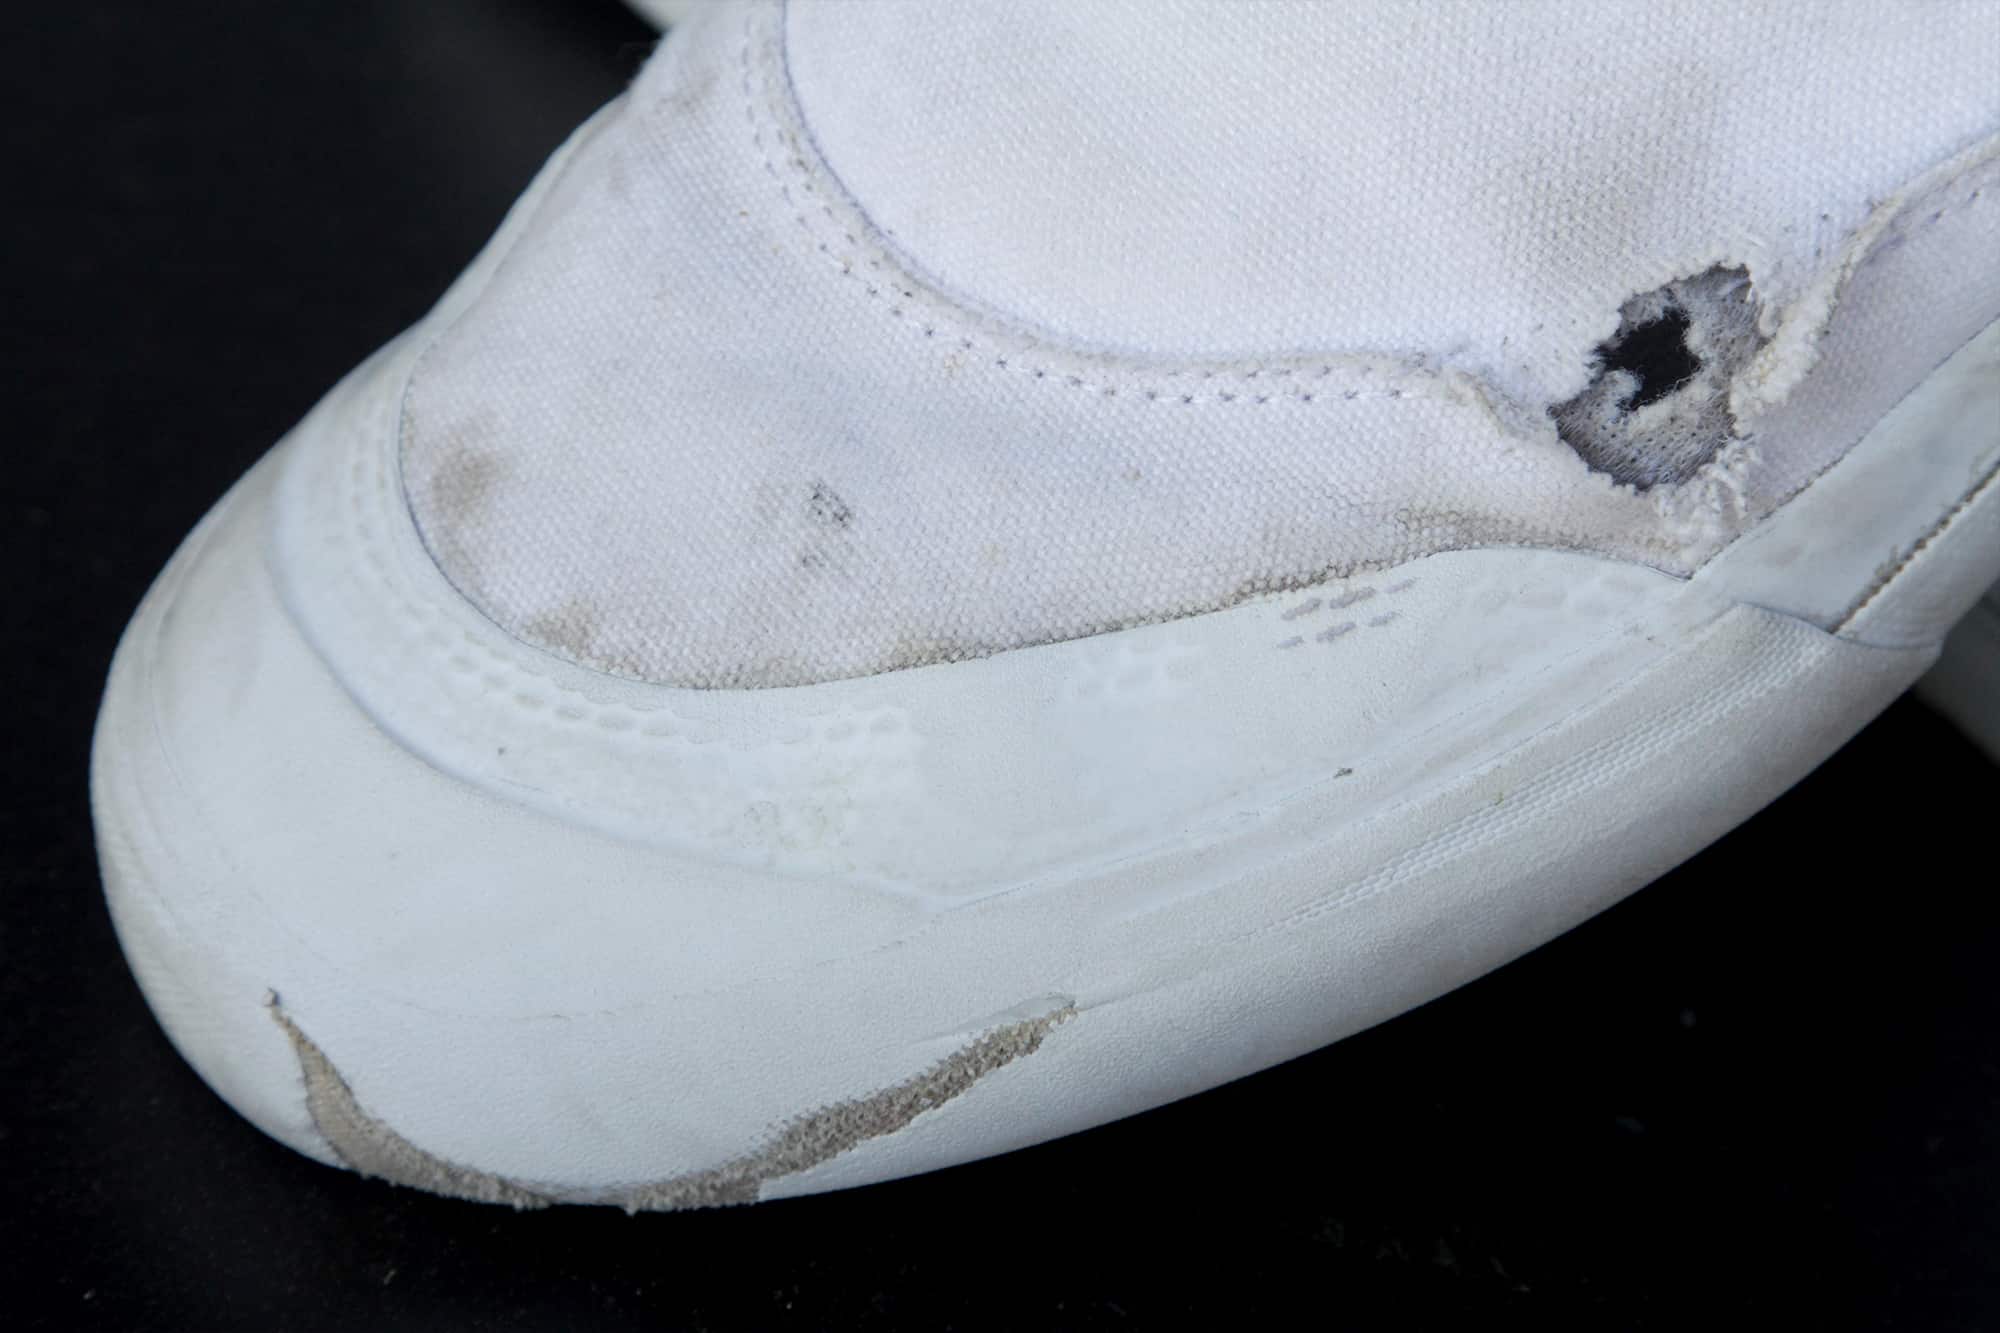 adidas matchcourt slip shoes